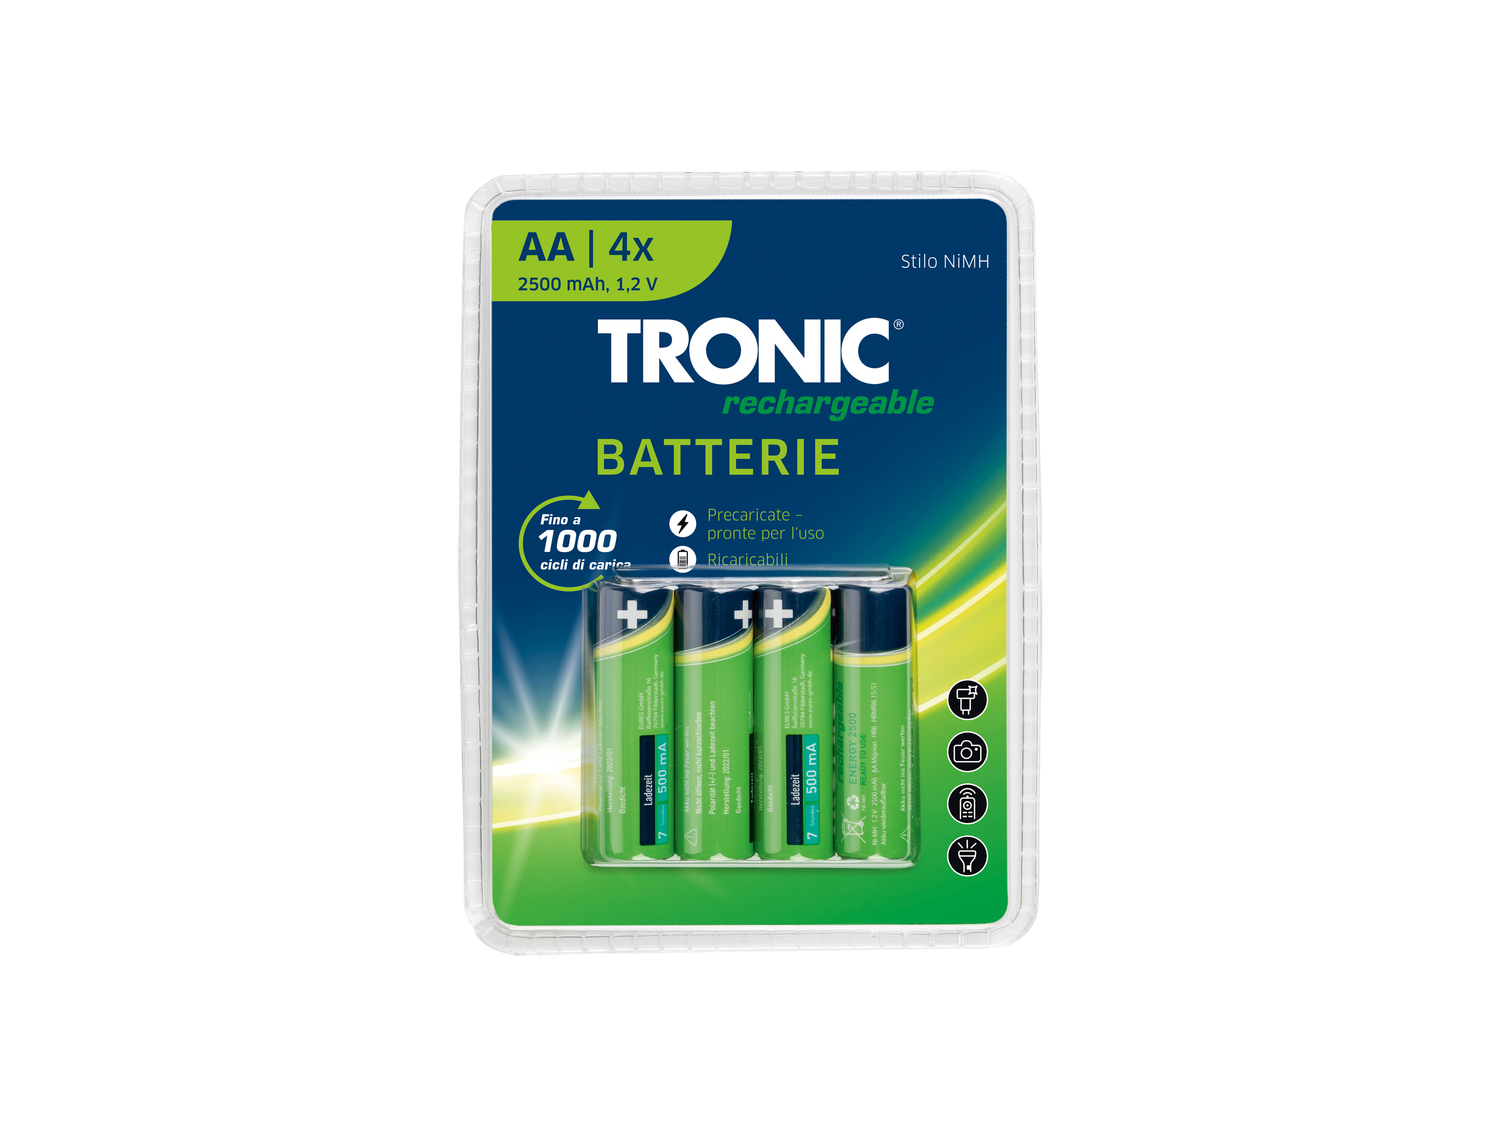 Batterie ricaricabili Tronic, prezzo 3.99 &#8364; 
4 pezzi 
- AA o AAA
- Precaricate ...